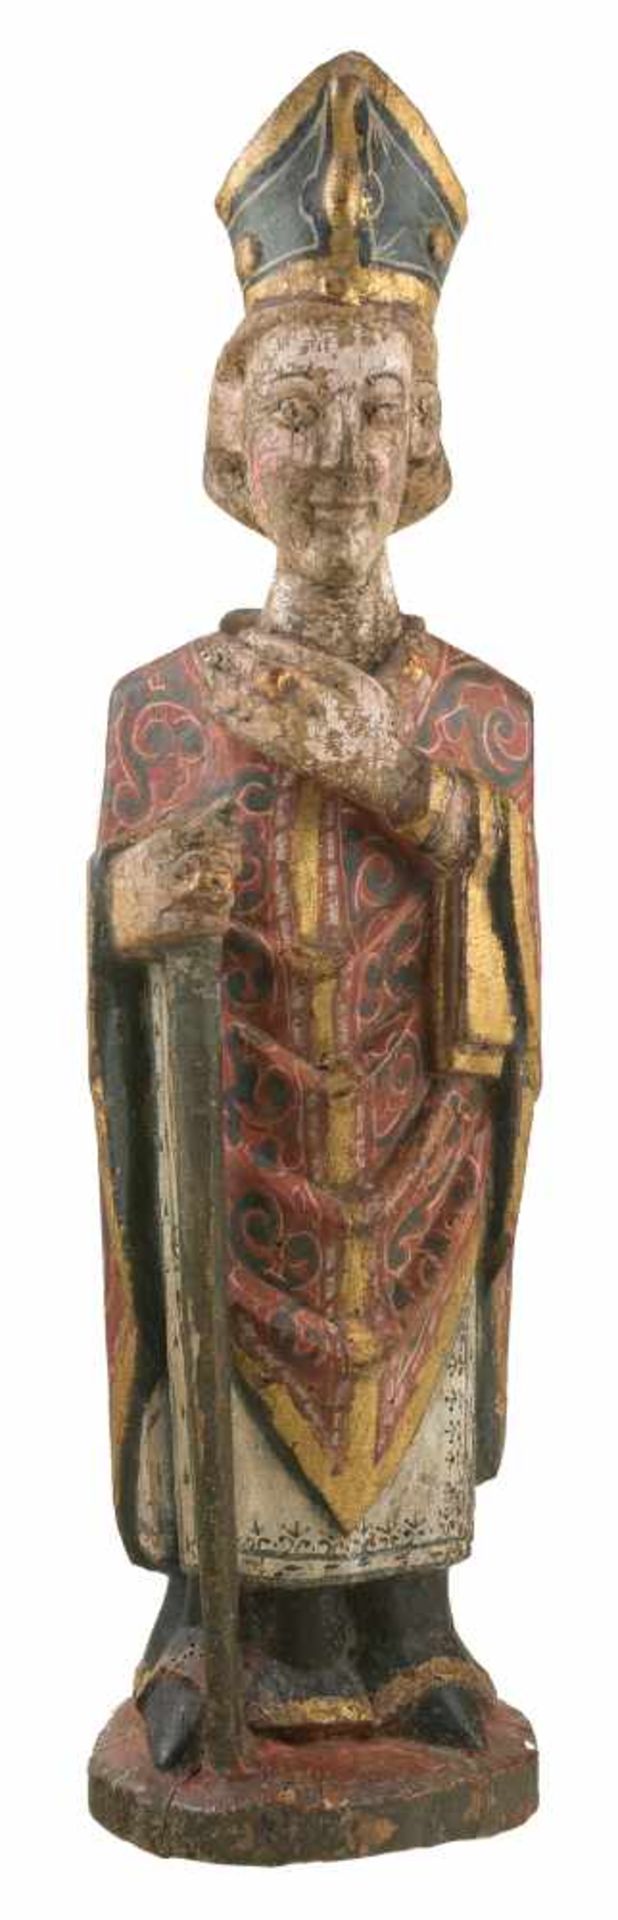 Bishop. Carved, gilded and polychromed wooden sculpture. Gothic. Circa 1300.Bishop. Carved, gilded